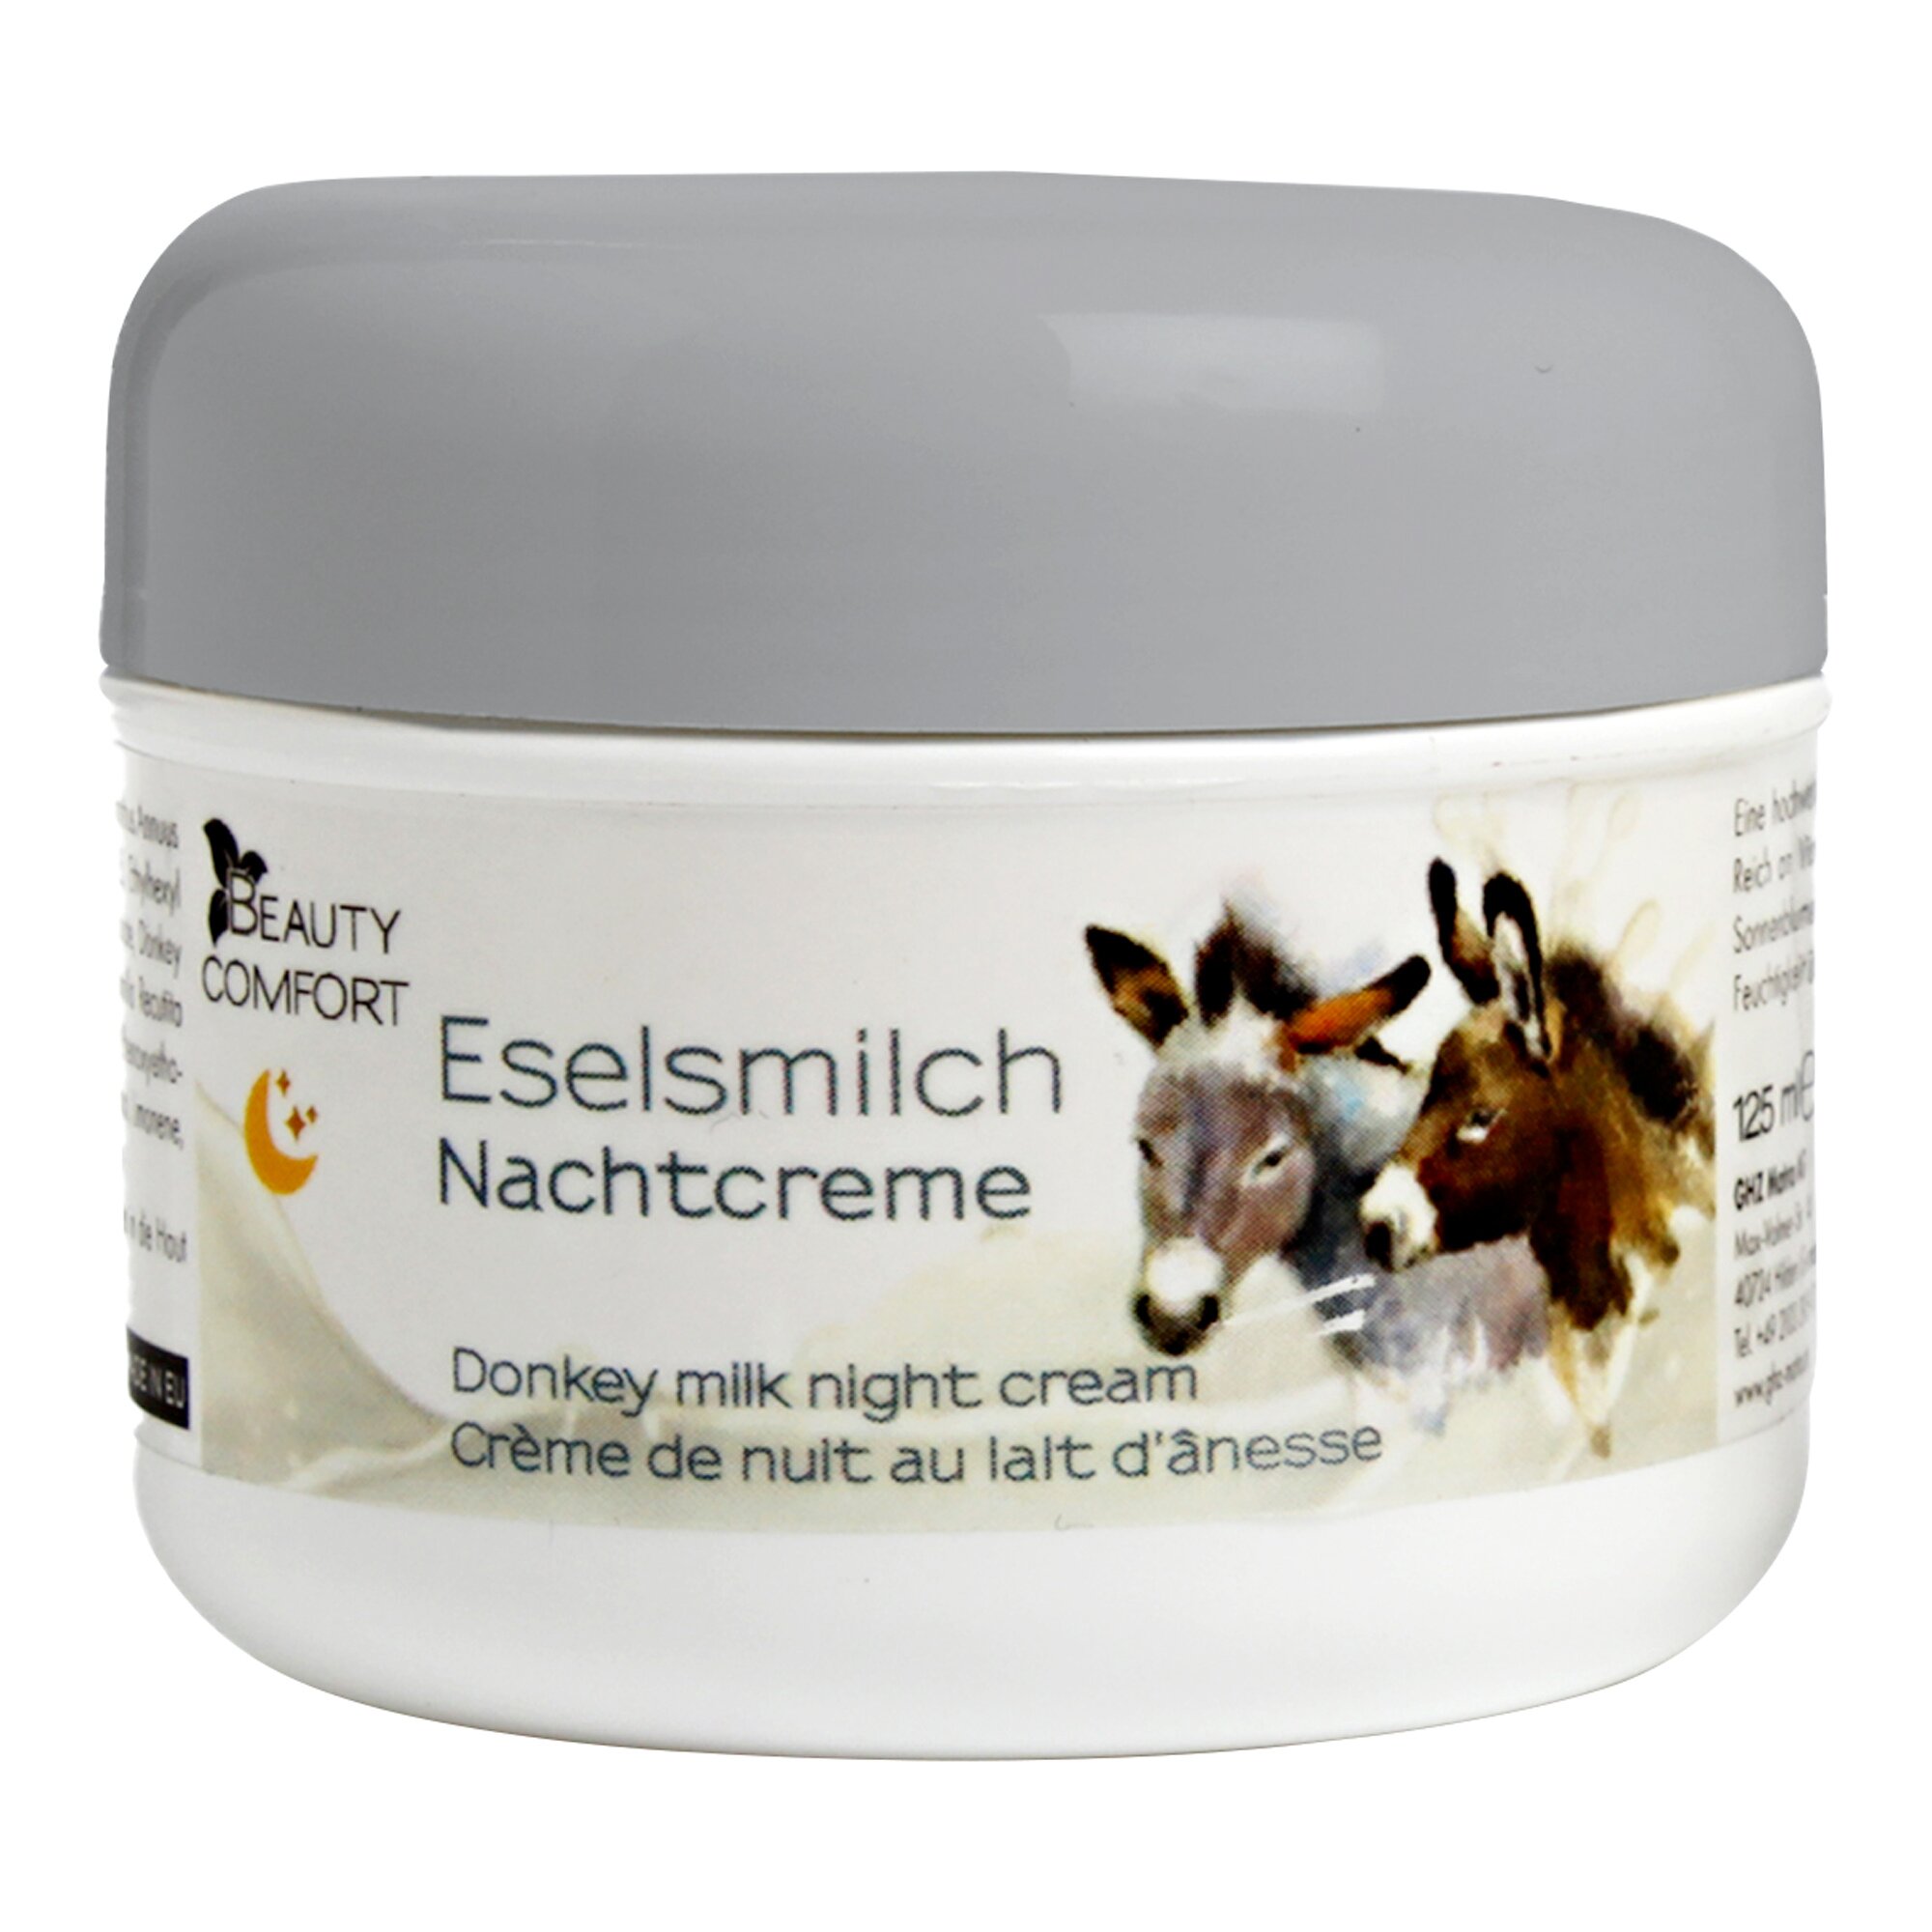 Image of Nachtcreme "Eselsmilch", 125 ml